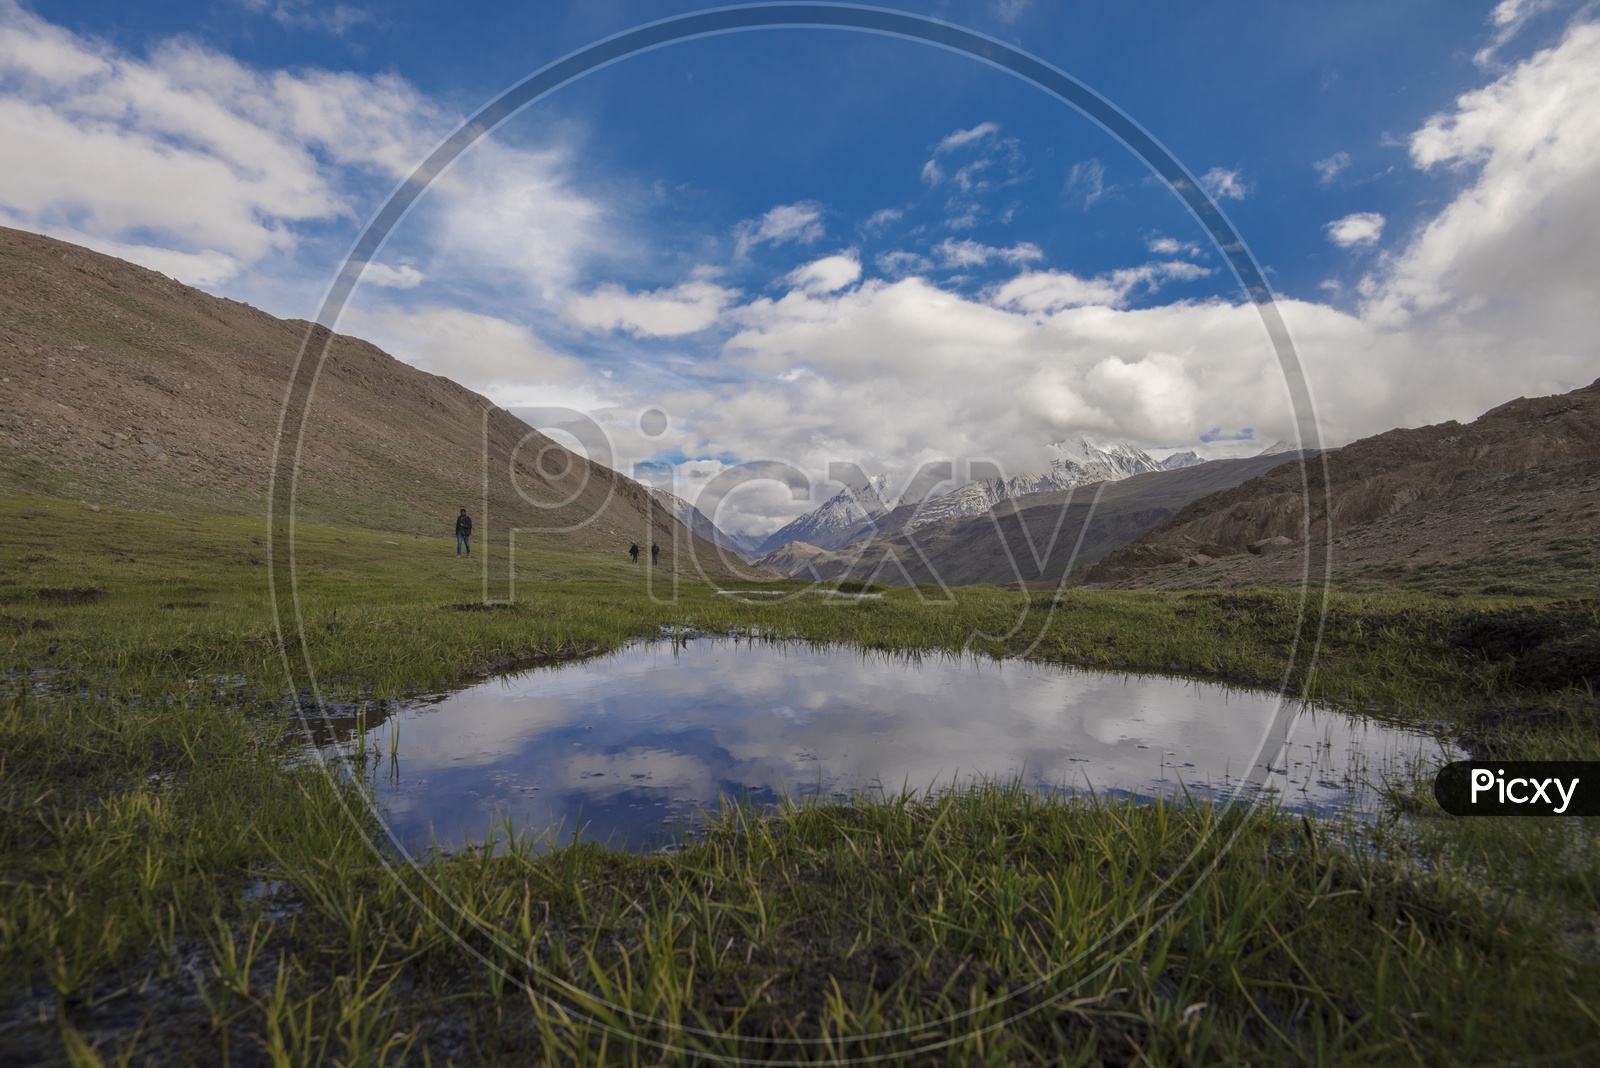 A River Valley in Leh / Ladakh